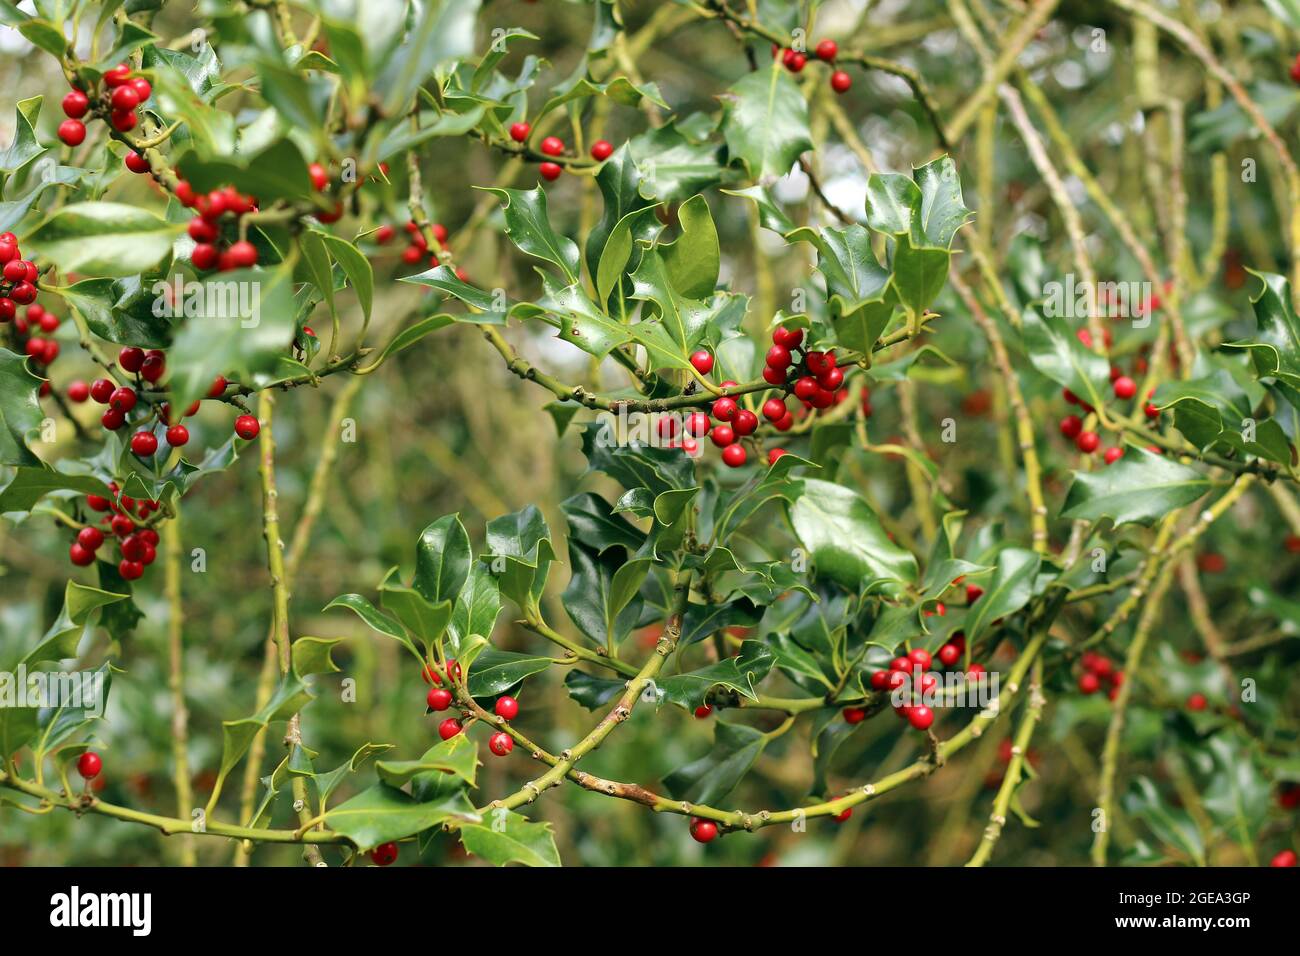 Holly branch with red berries on, Ilex aquifolium Stock Photo